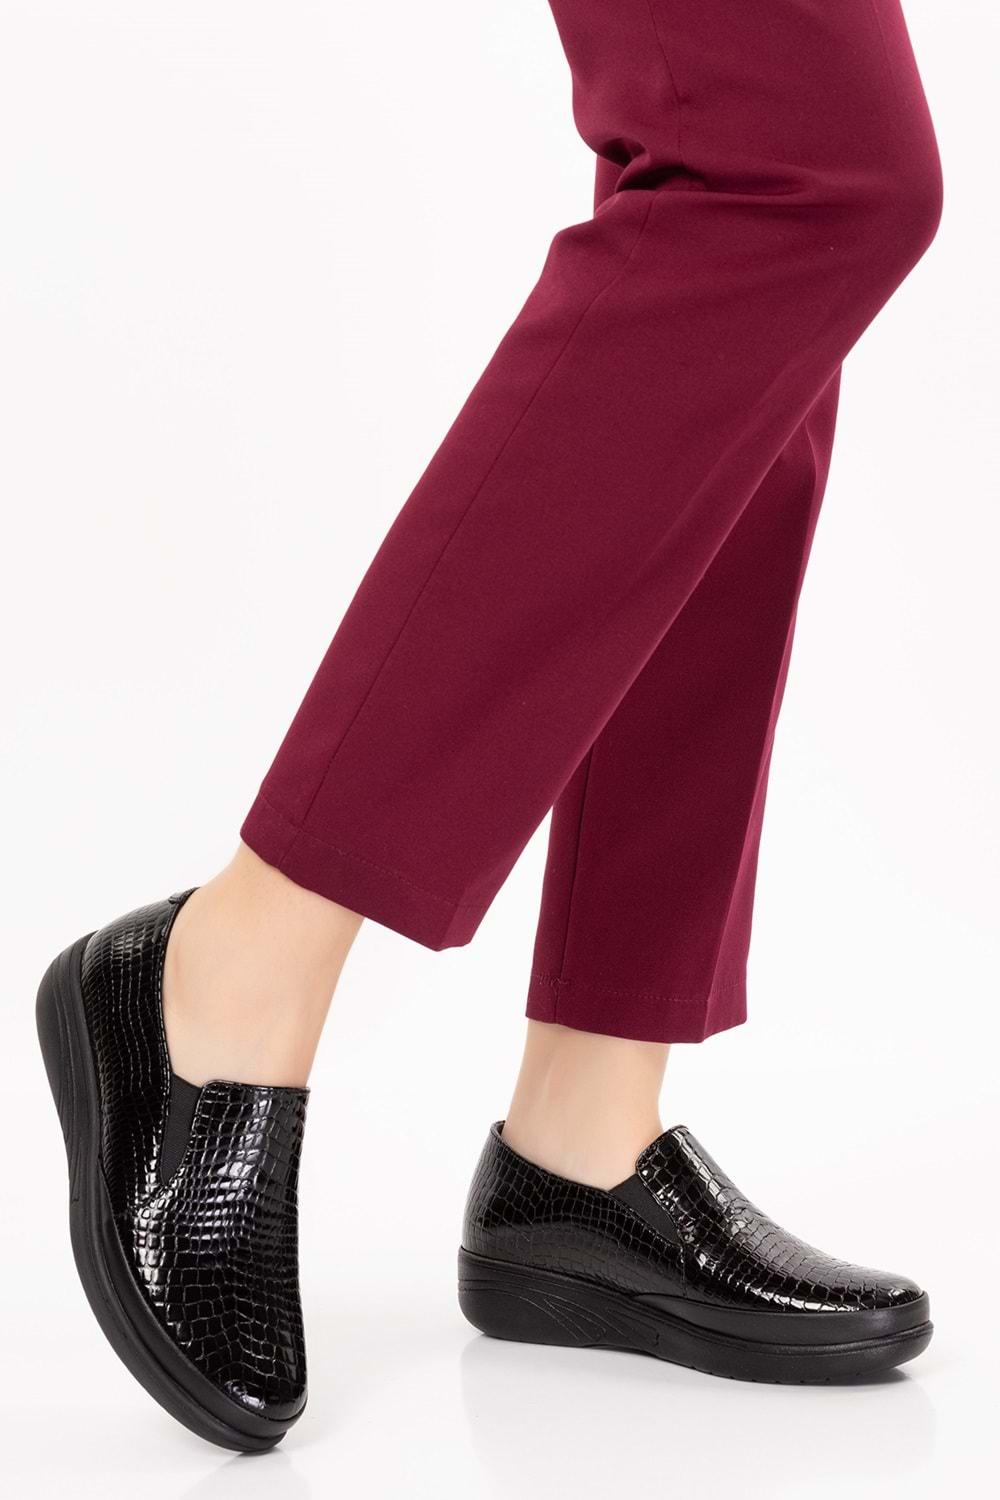 Gondol Hakiki Deri Kadın Dolgu Topuklu Rahat Ayakkabı at.4201 - Siyah Croco - 40